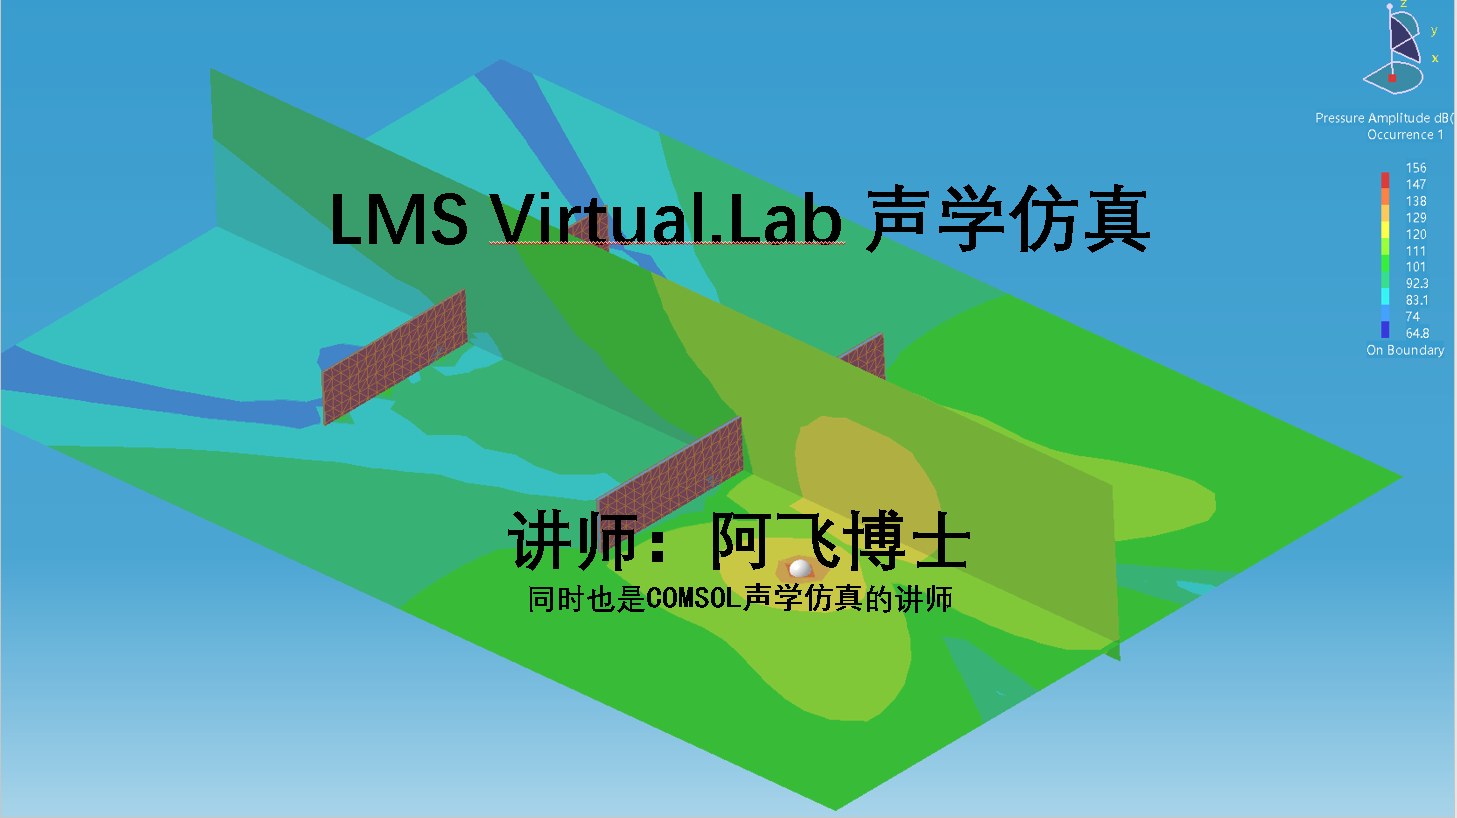 LMS Virtual.Lab和Simcenter 3D软件相关声学仿真